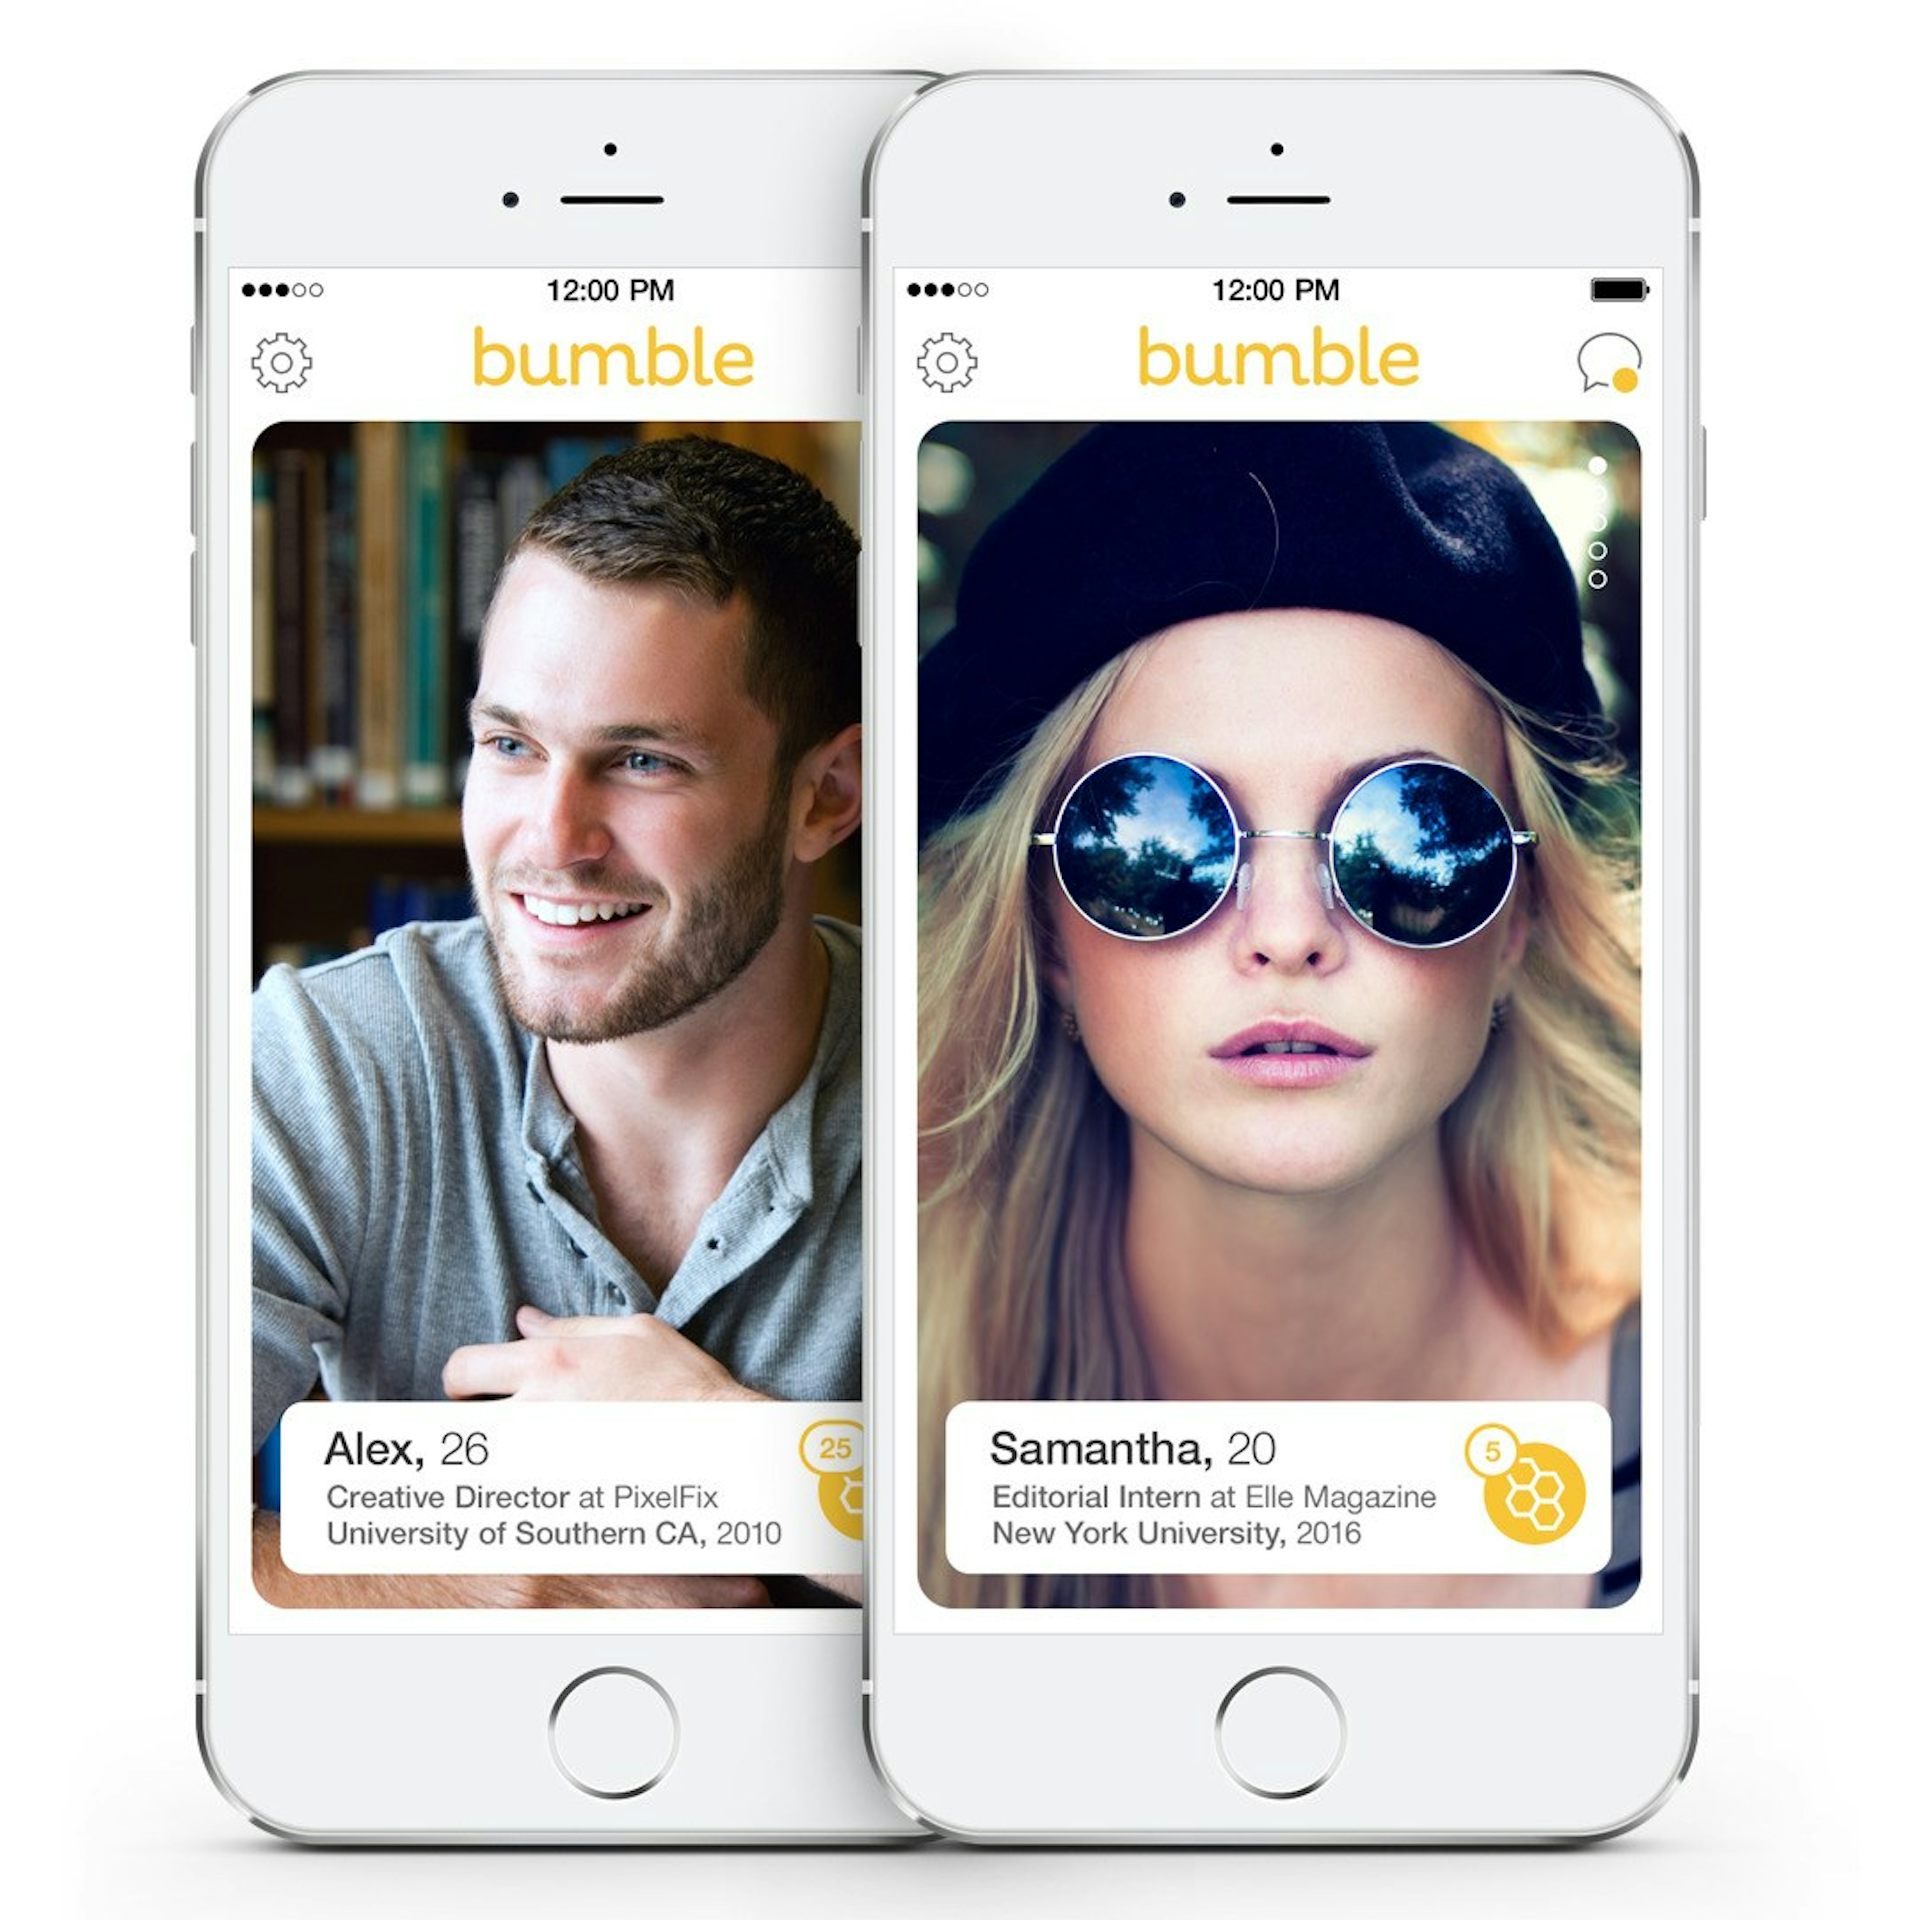 Mobile dating apps NZ goede dingen om te praten over online dating